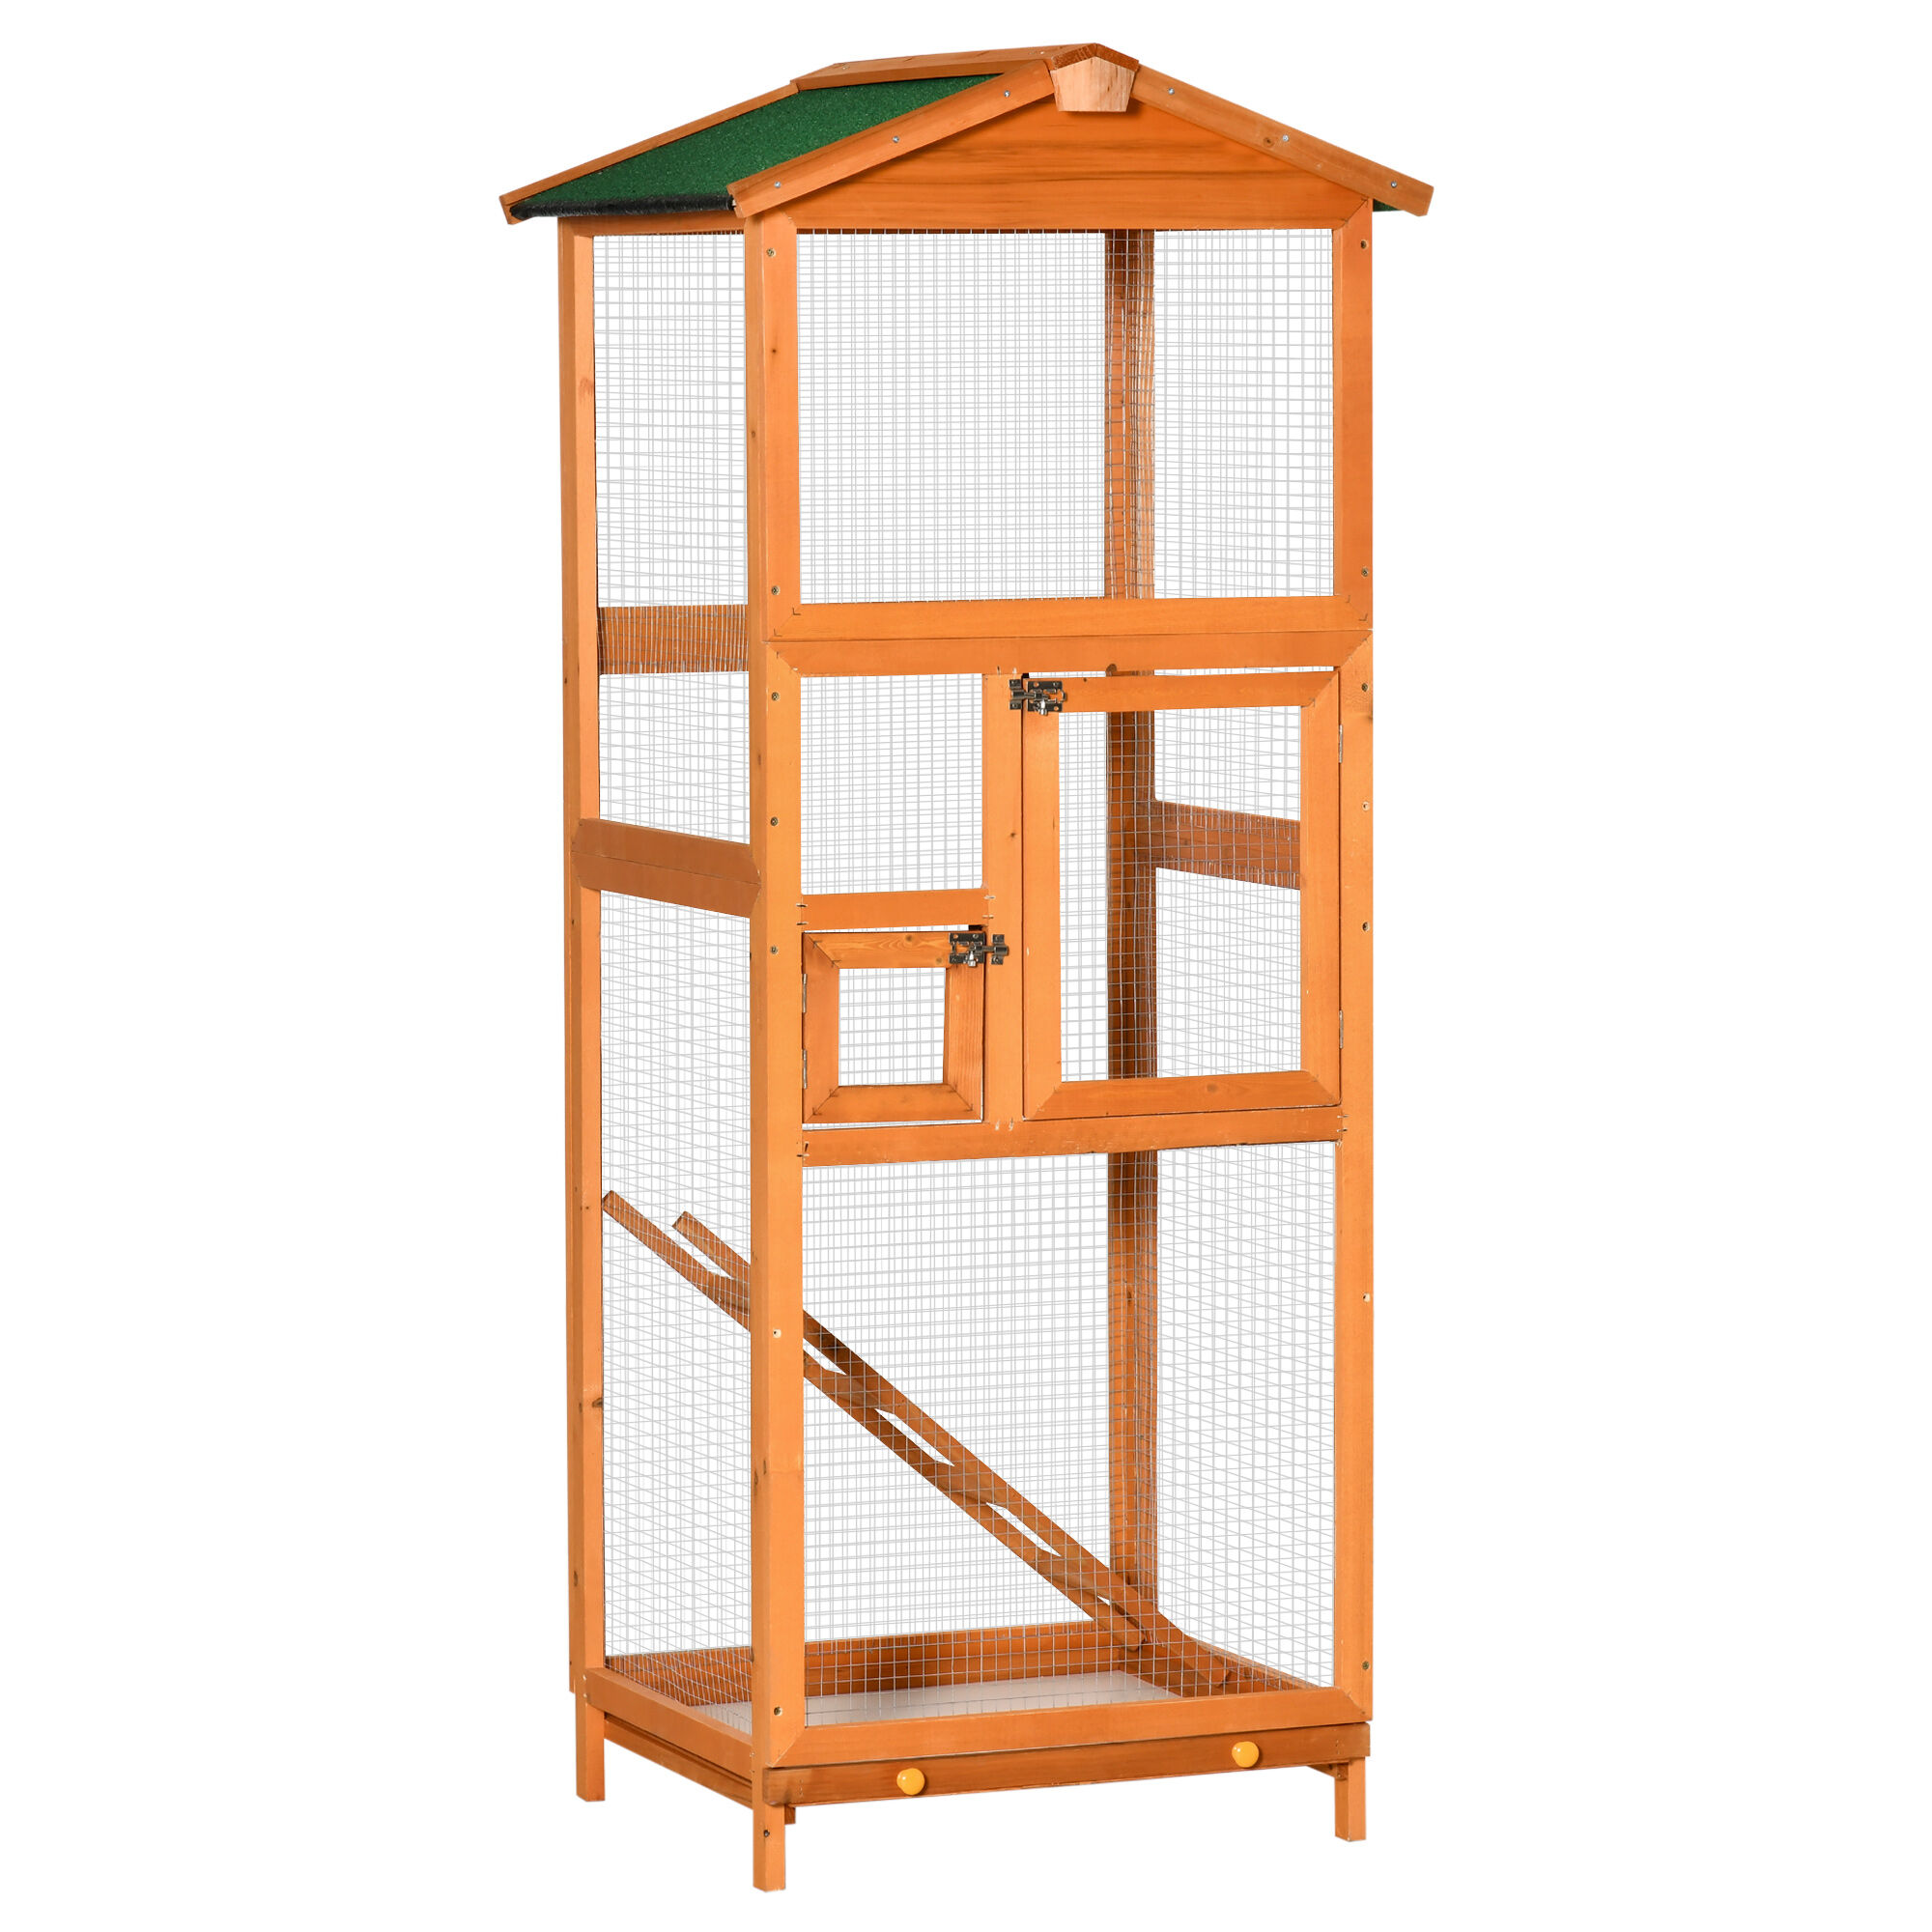 PawHut 65 Large Wooden Bird Cage Outdoor Aviary with Tray 2 Doors Orange   Aosom.com